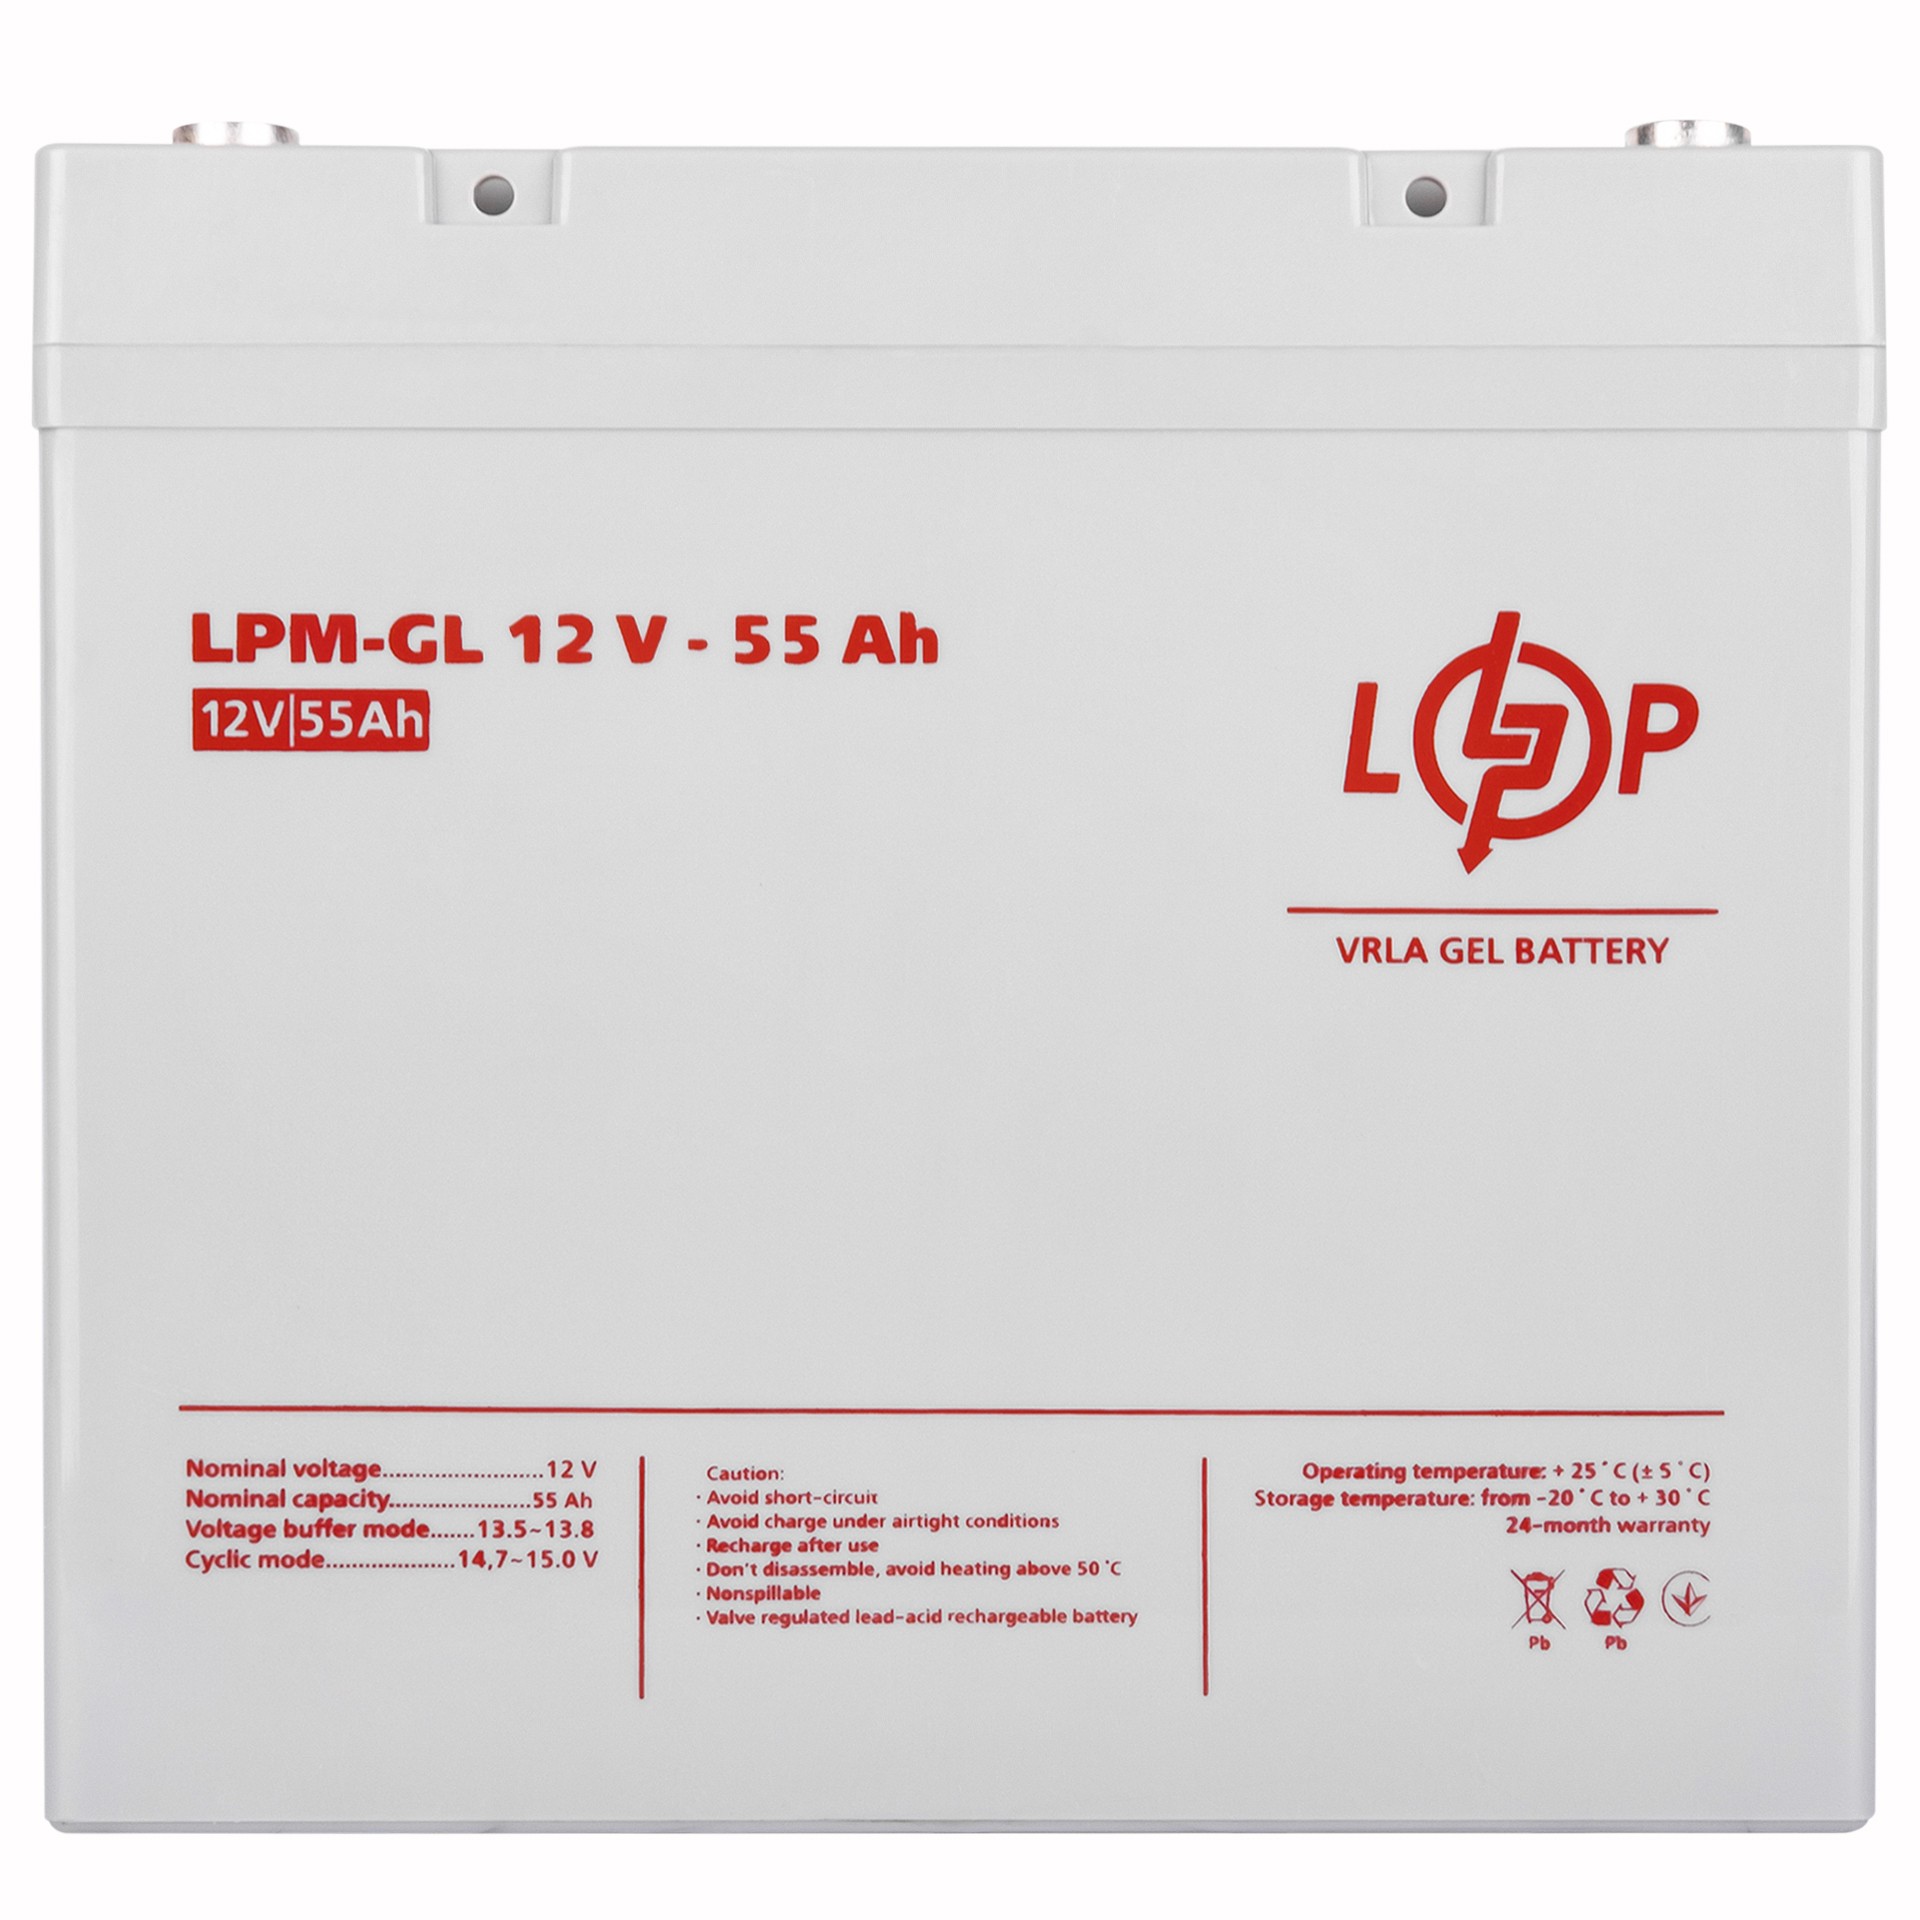 LogicPower LPM-GL 12V - 55 Ah